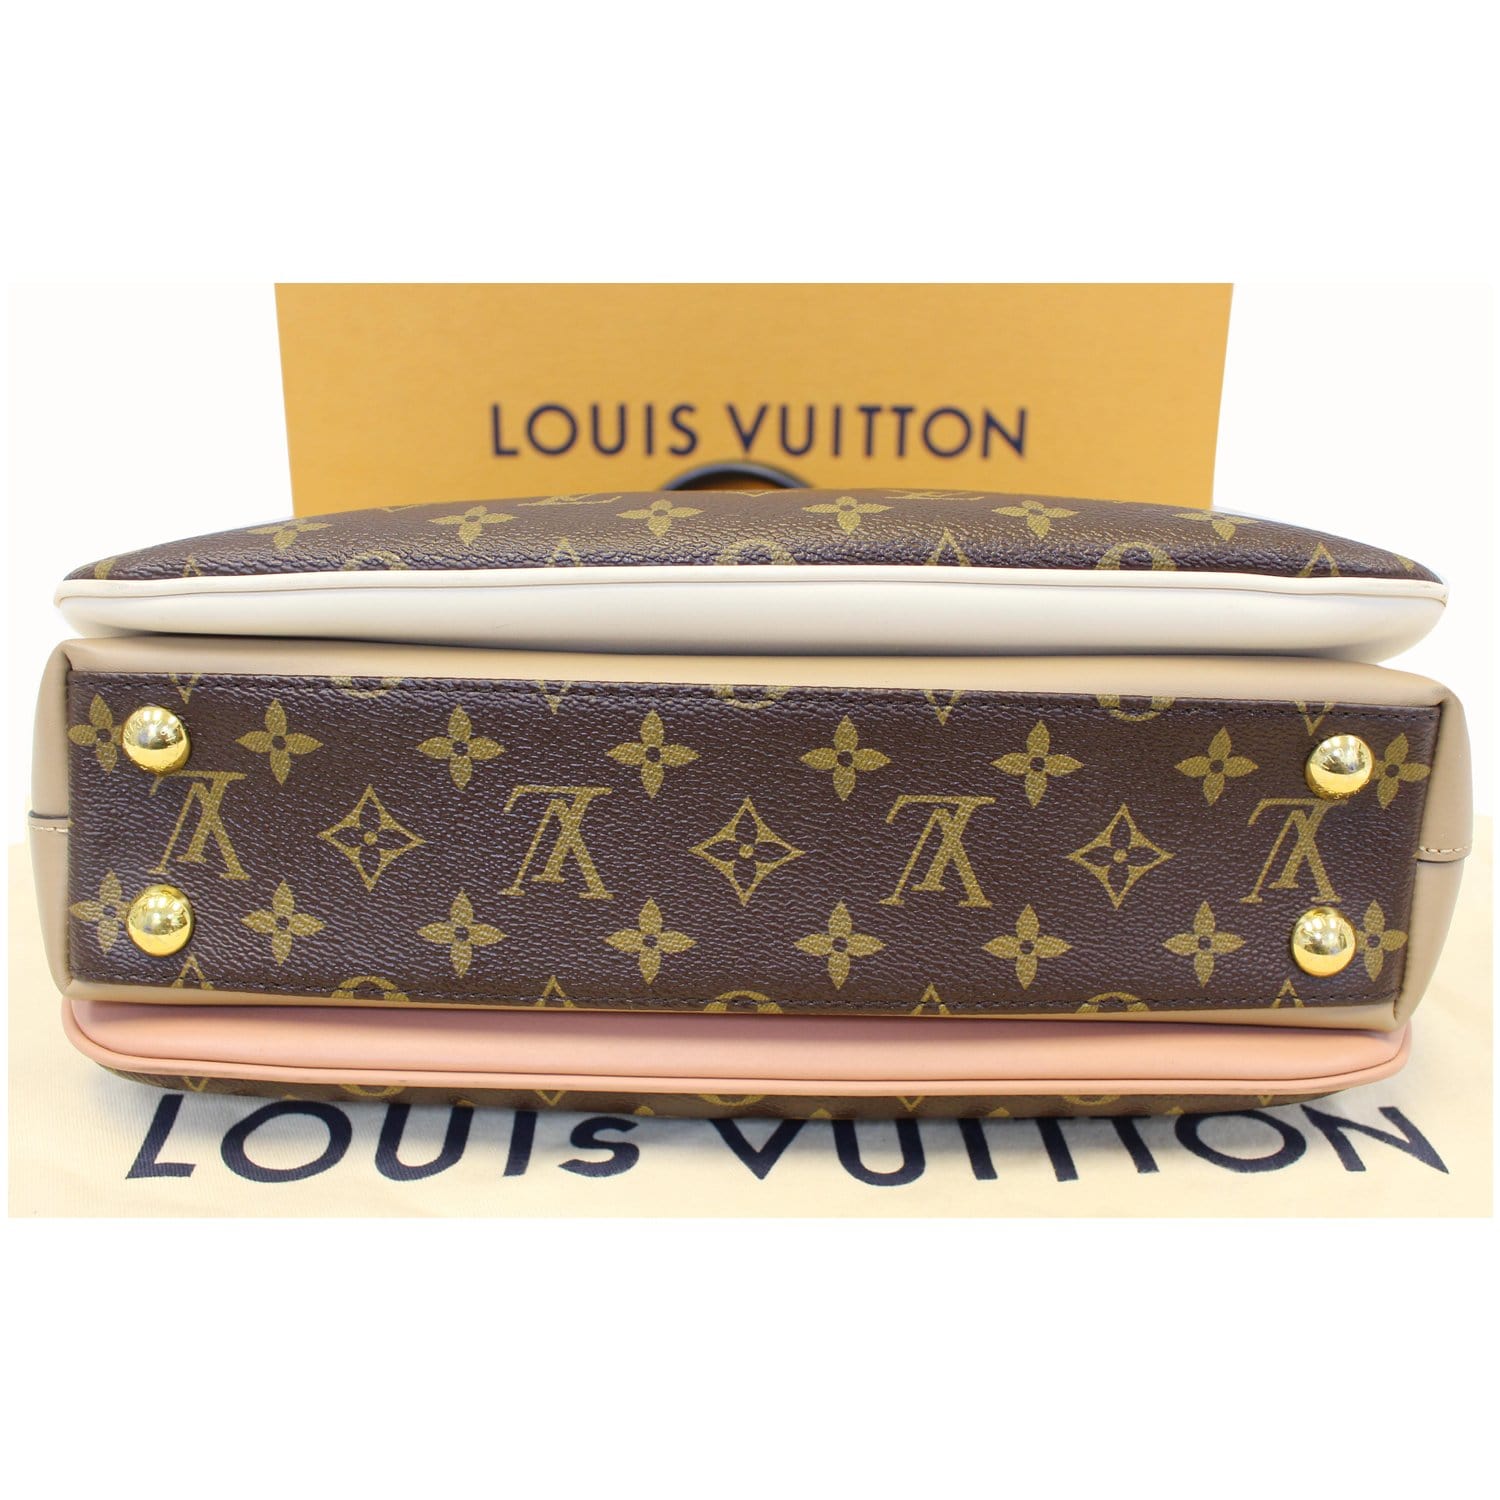 Mille Feuille: Louis Vuitton Fine Jewellery